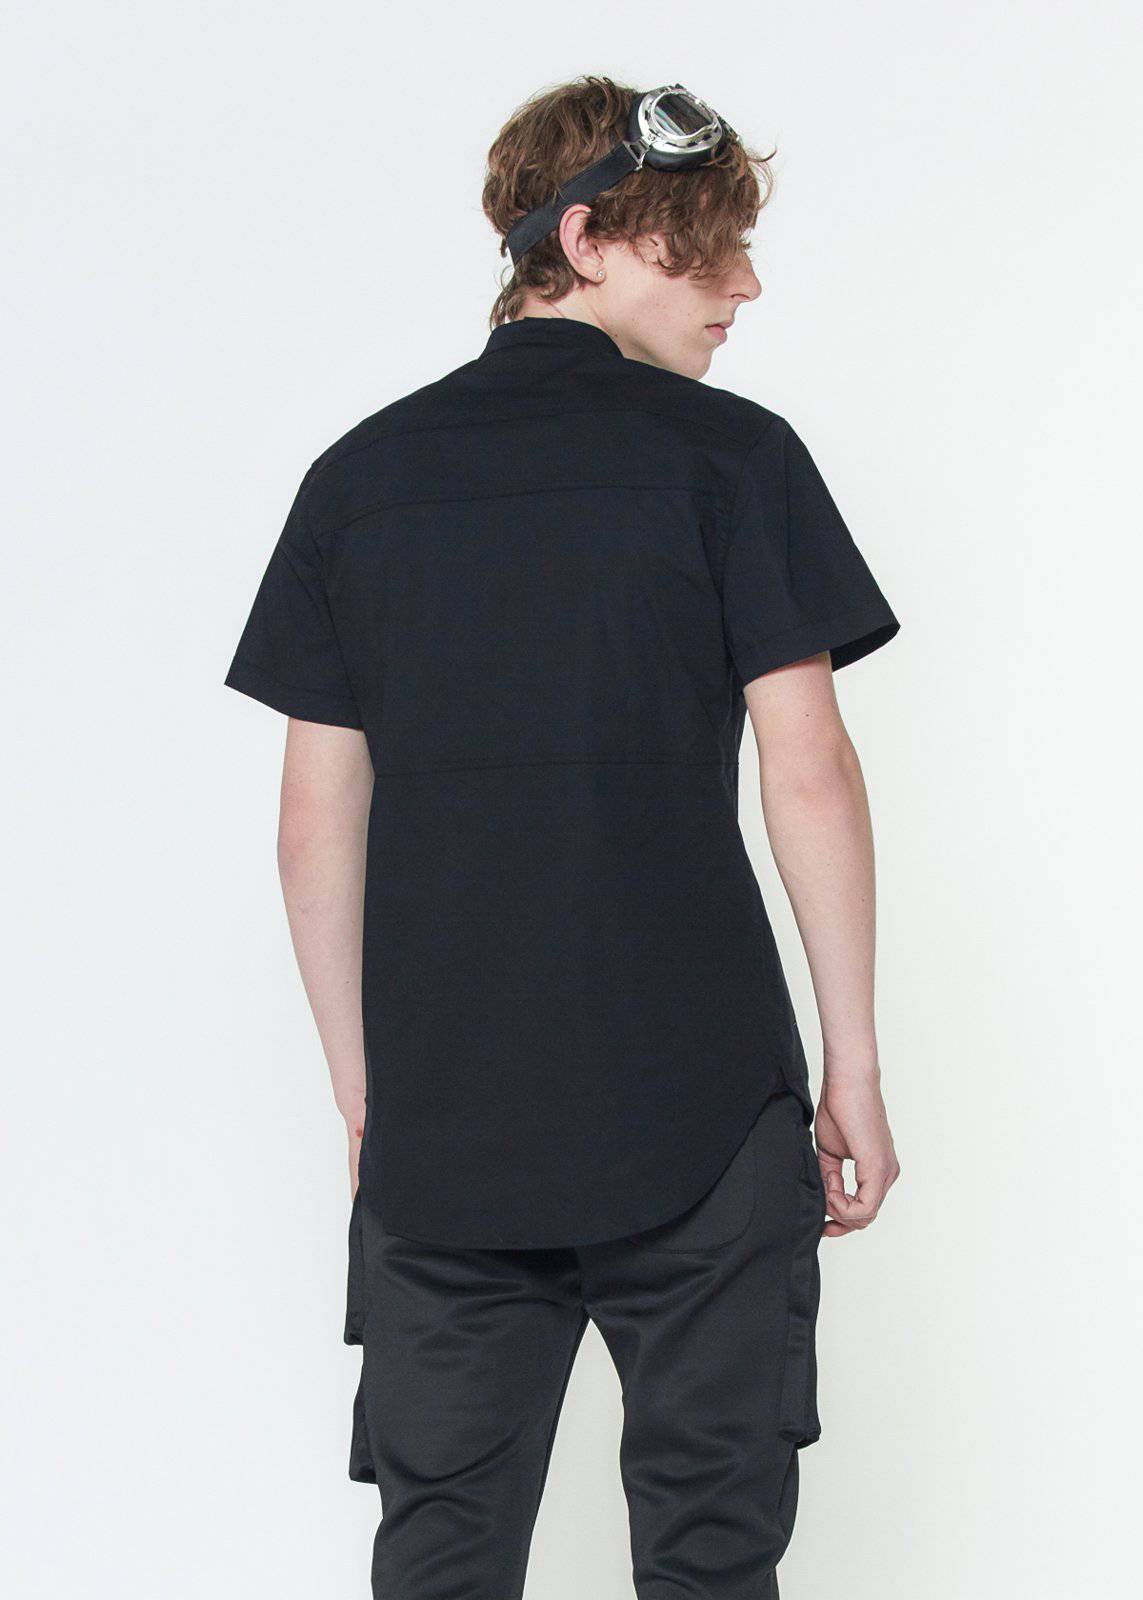 Konus Men's Short Sleeve Band Collar Shirt w/ Panels  in Black by Shop at Konus